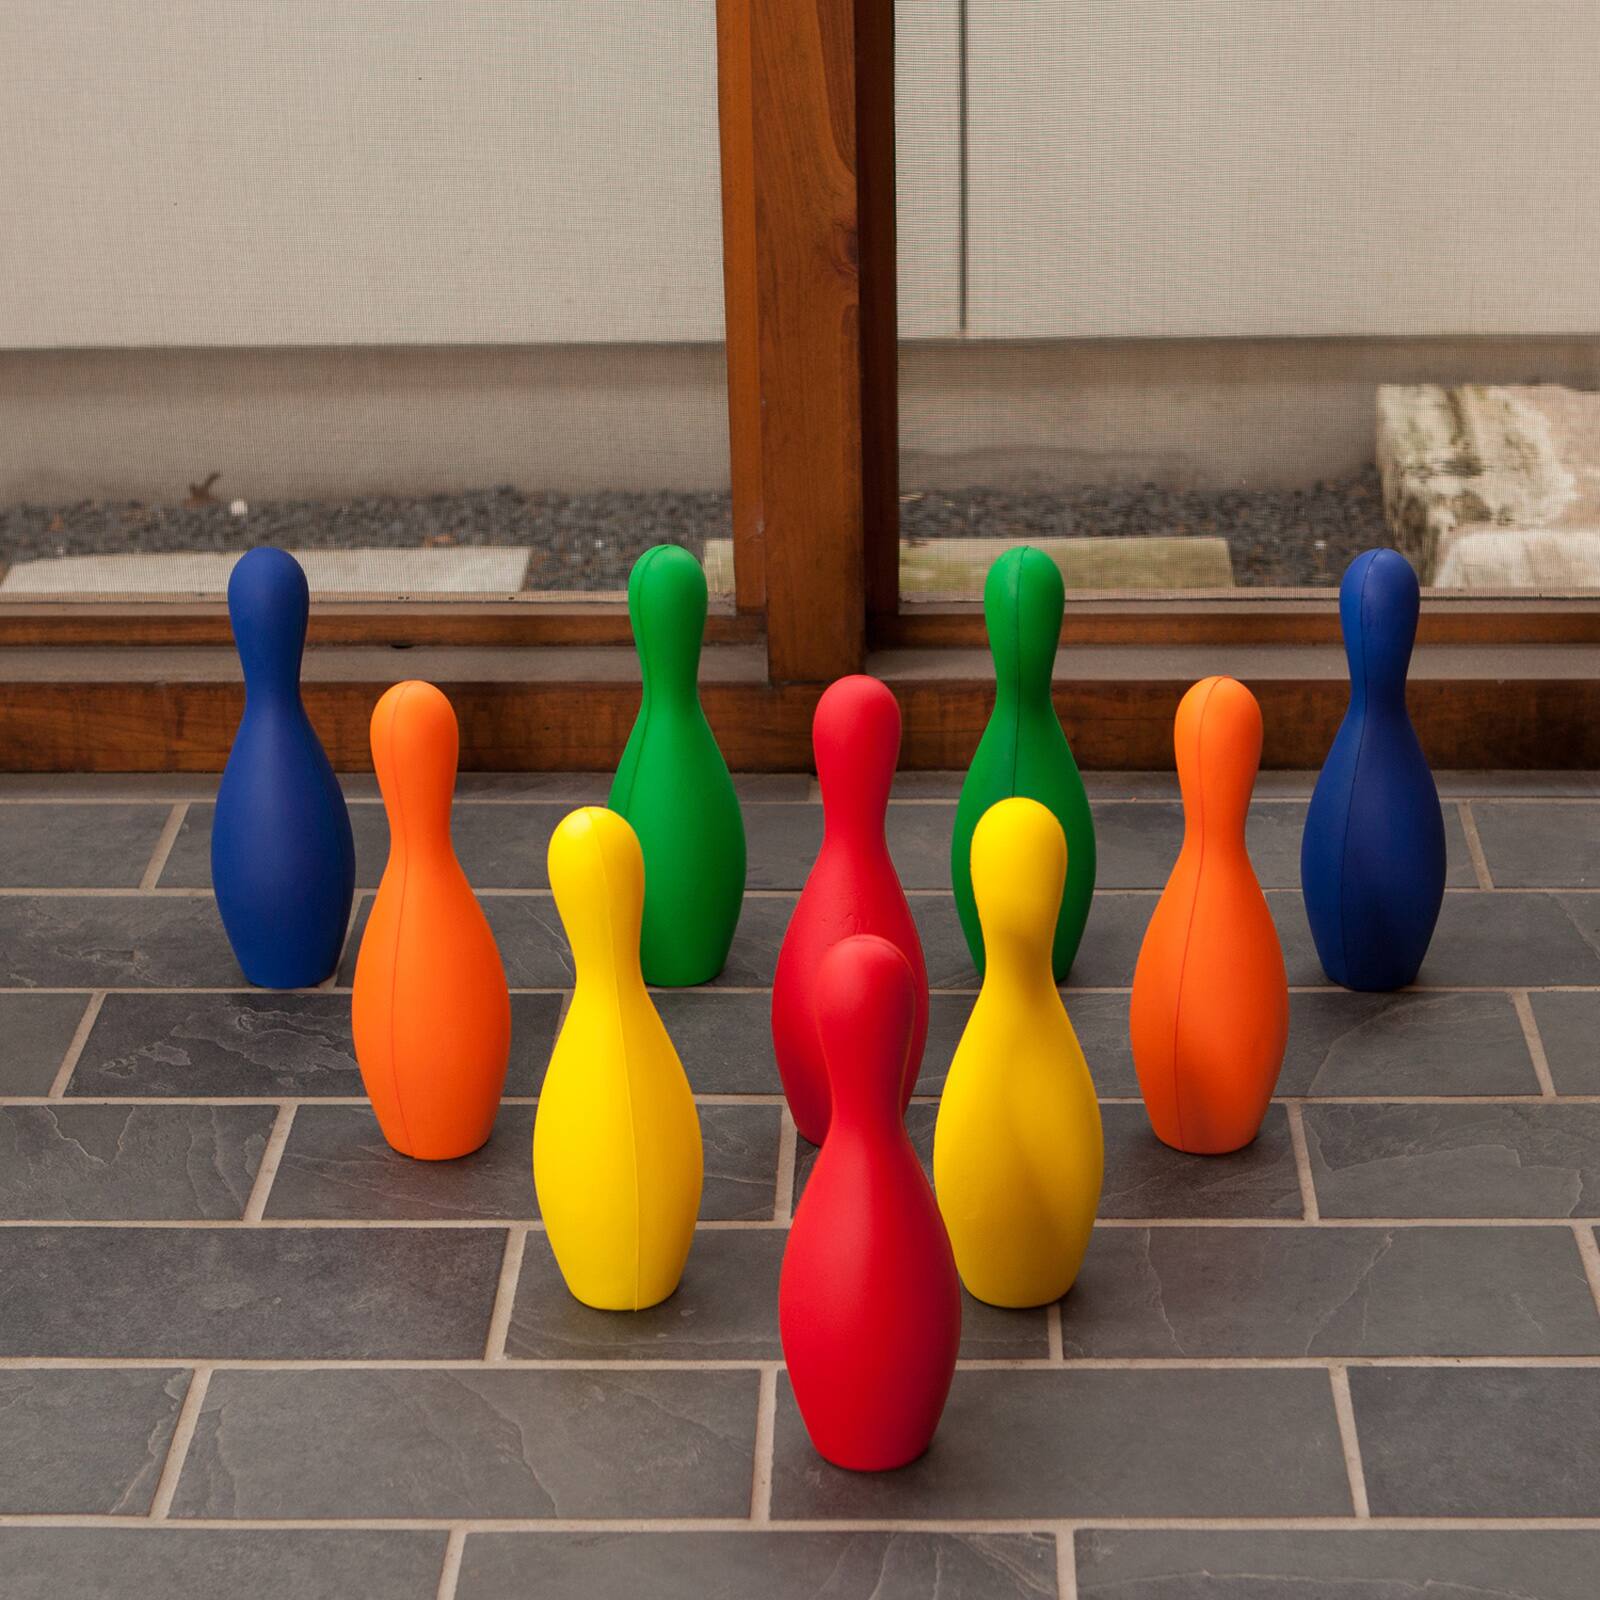 BSN Multi-Color Foam Bowling Pin Set w/Ball